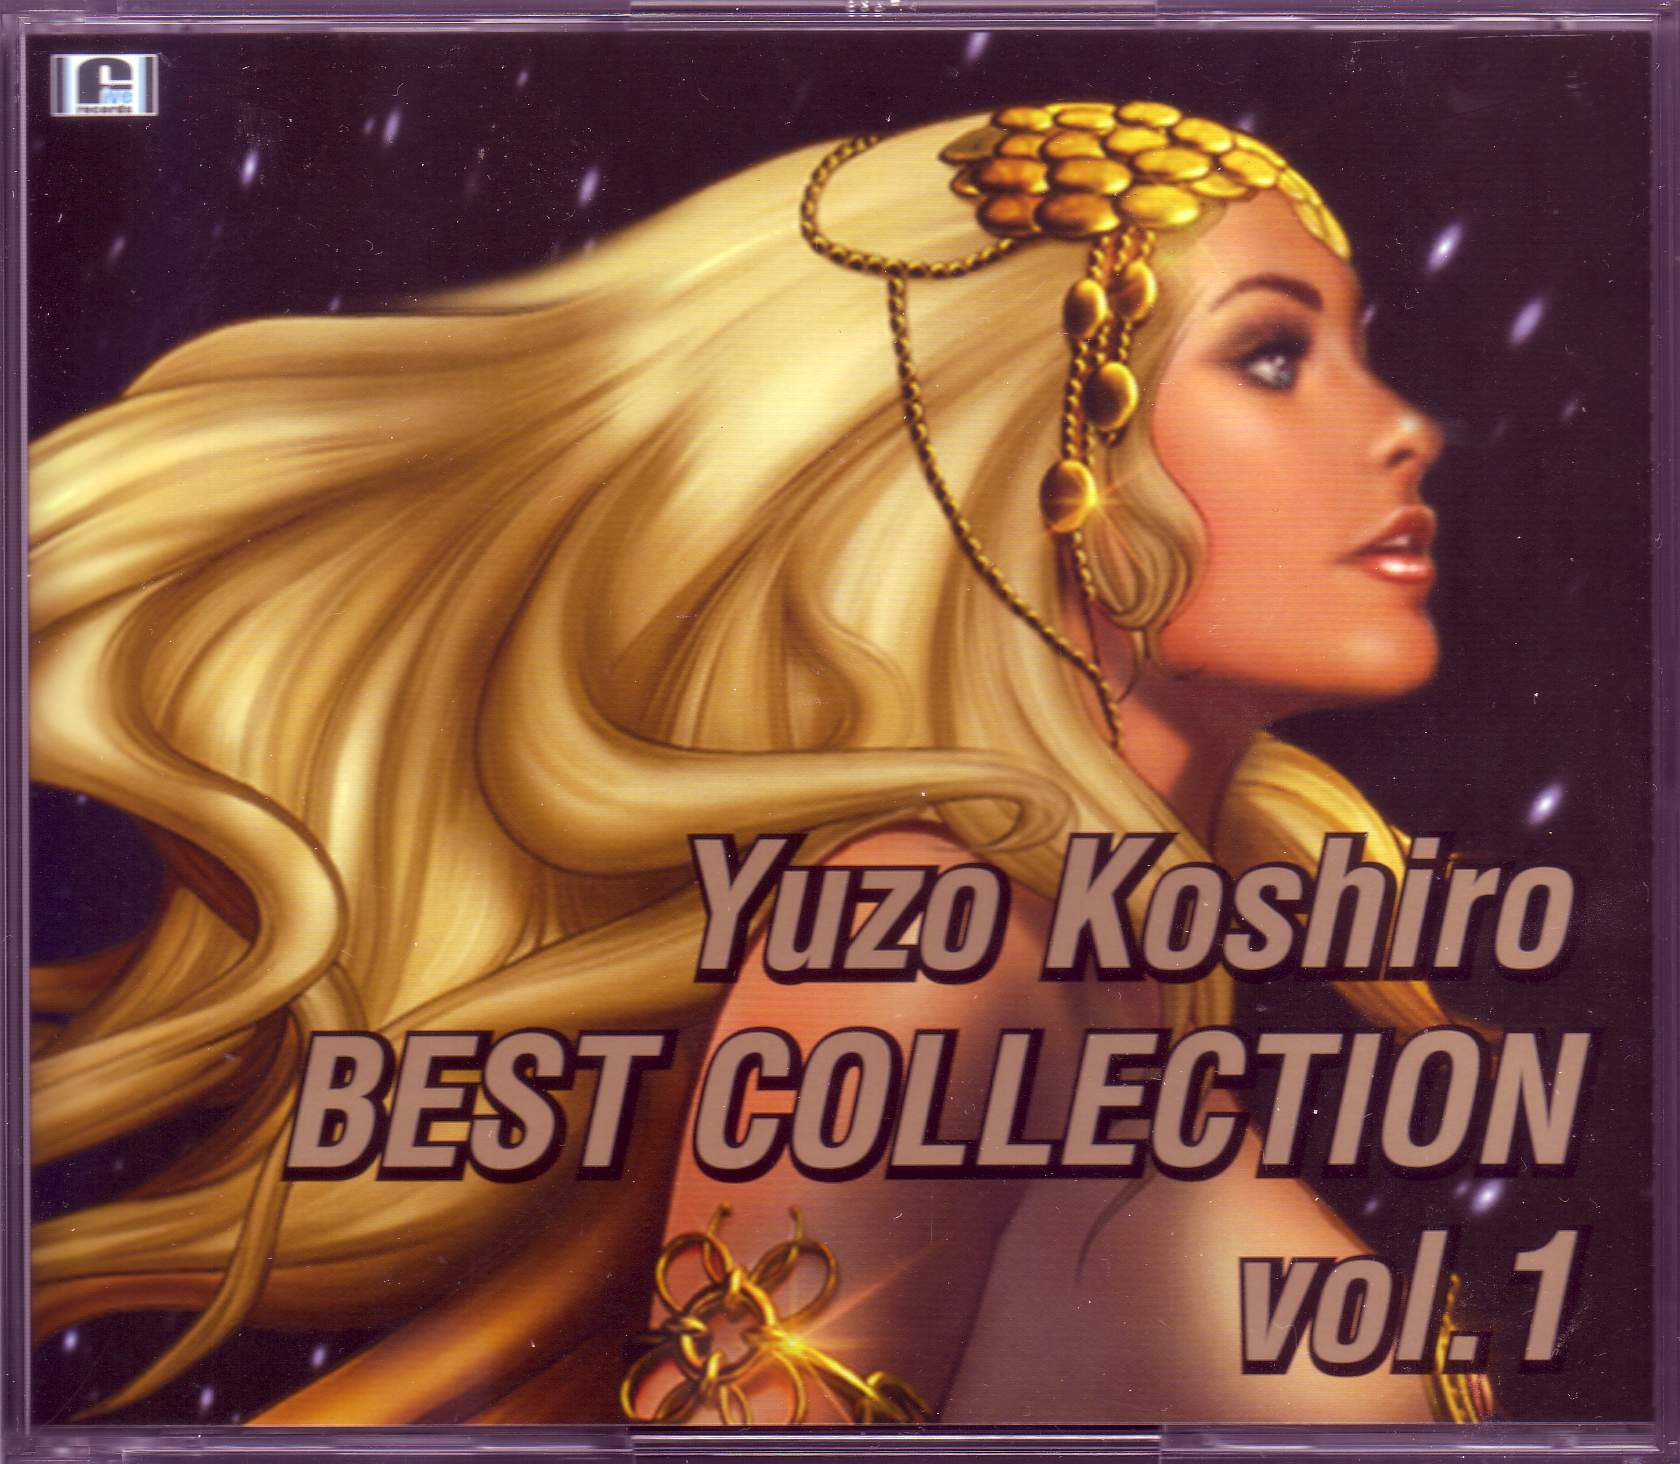 Yuzo Koshiro BEST COLLECTION vol.1 (2007) MP3 - Download Yuzo Koshiro BEST  COLLECTION vol.1 (2007) Soundtracks for FREE!